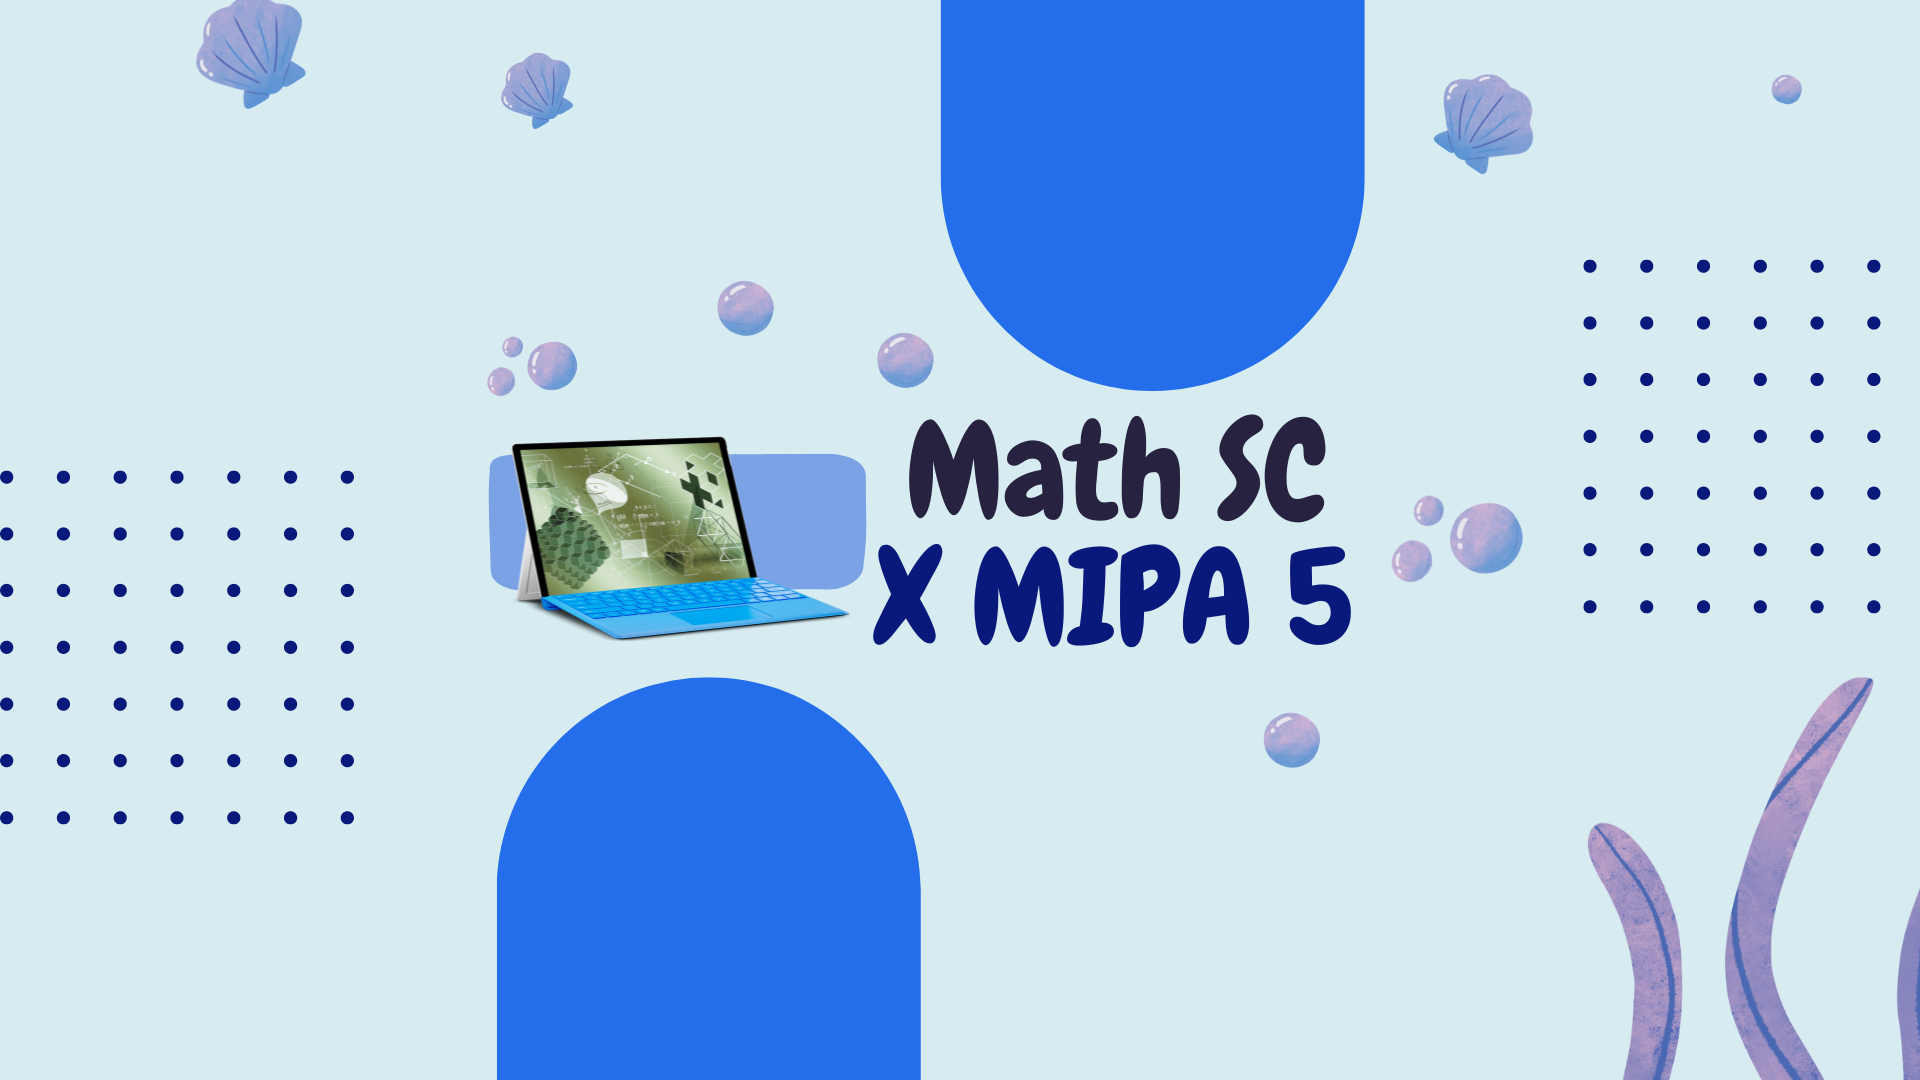 MATH SCIENCE X MIPA 5